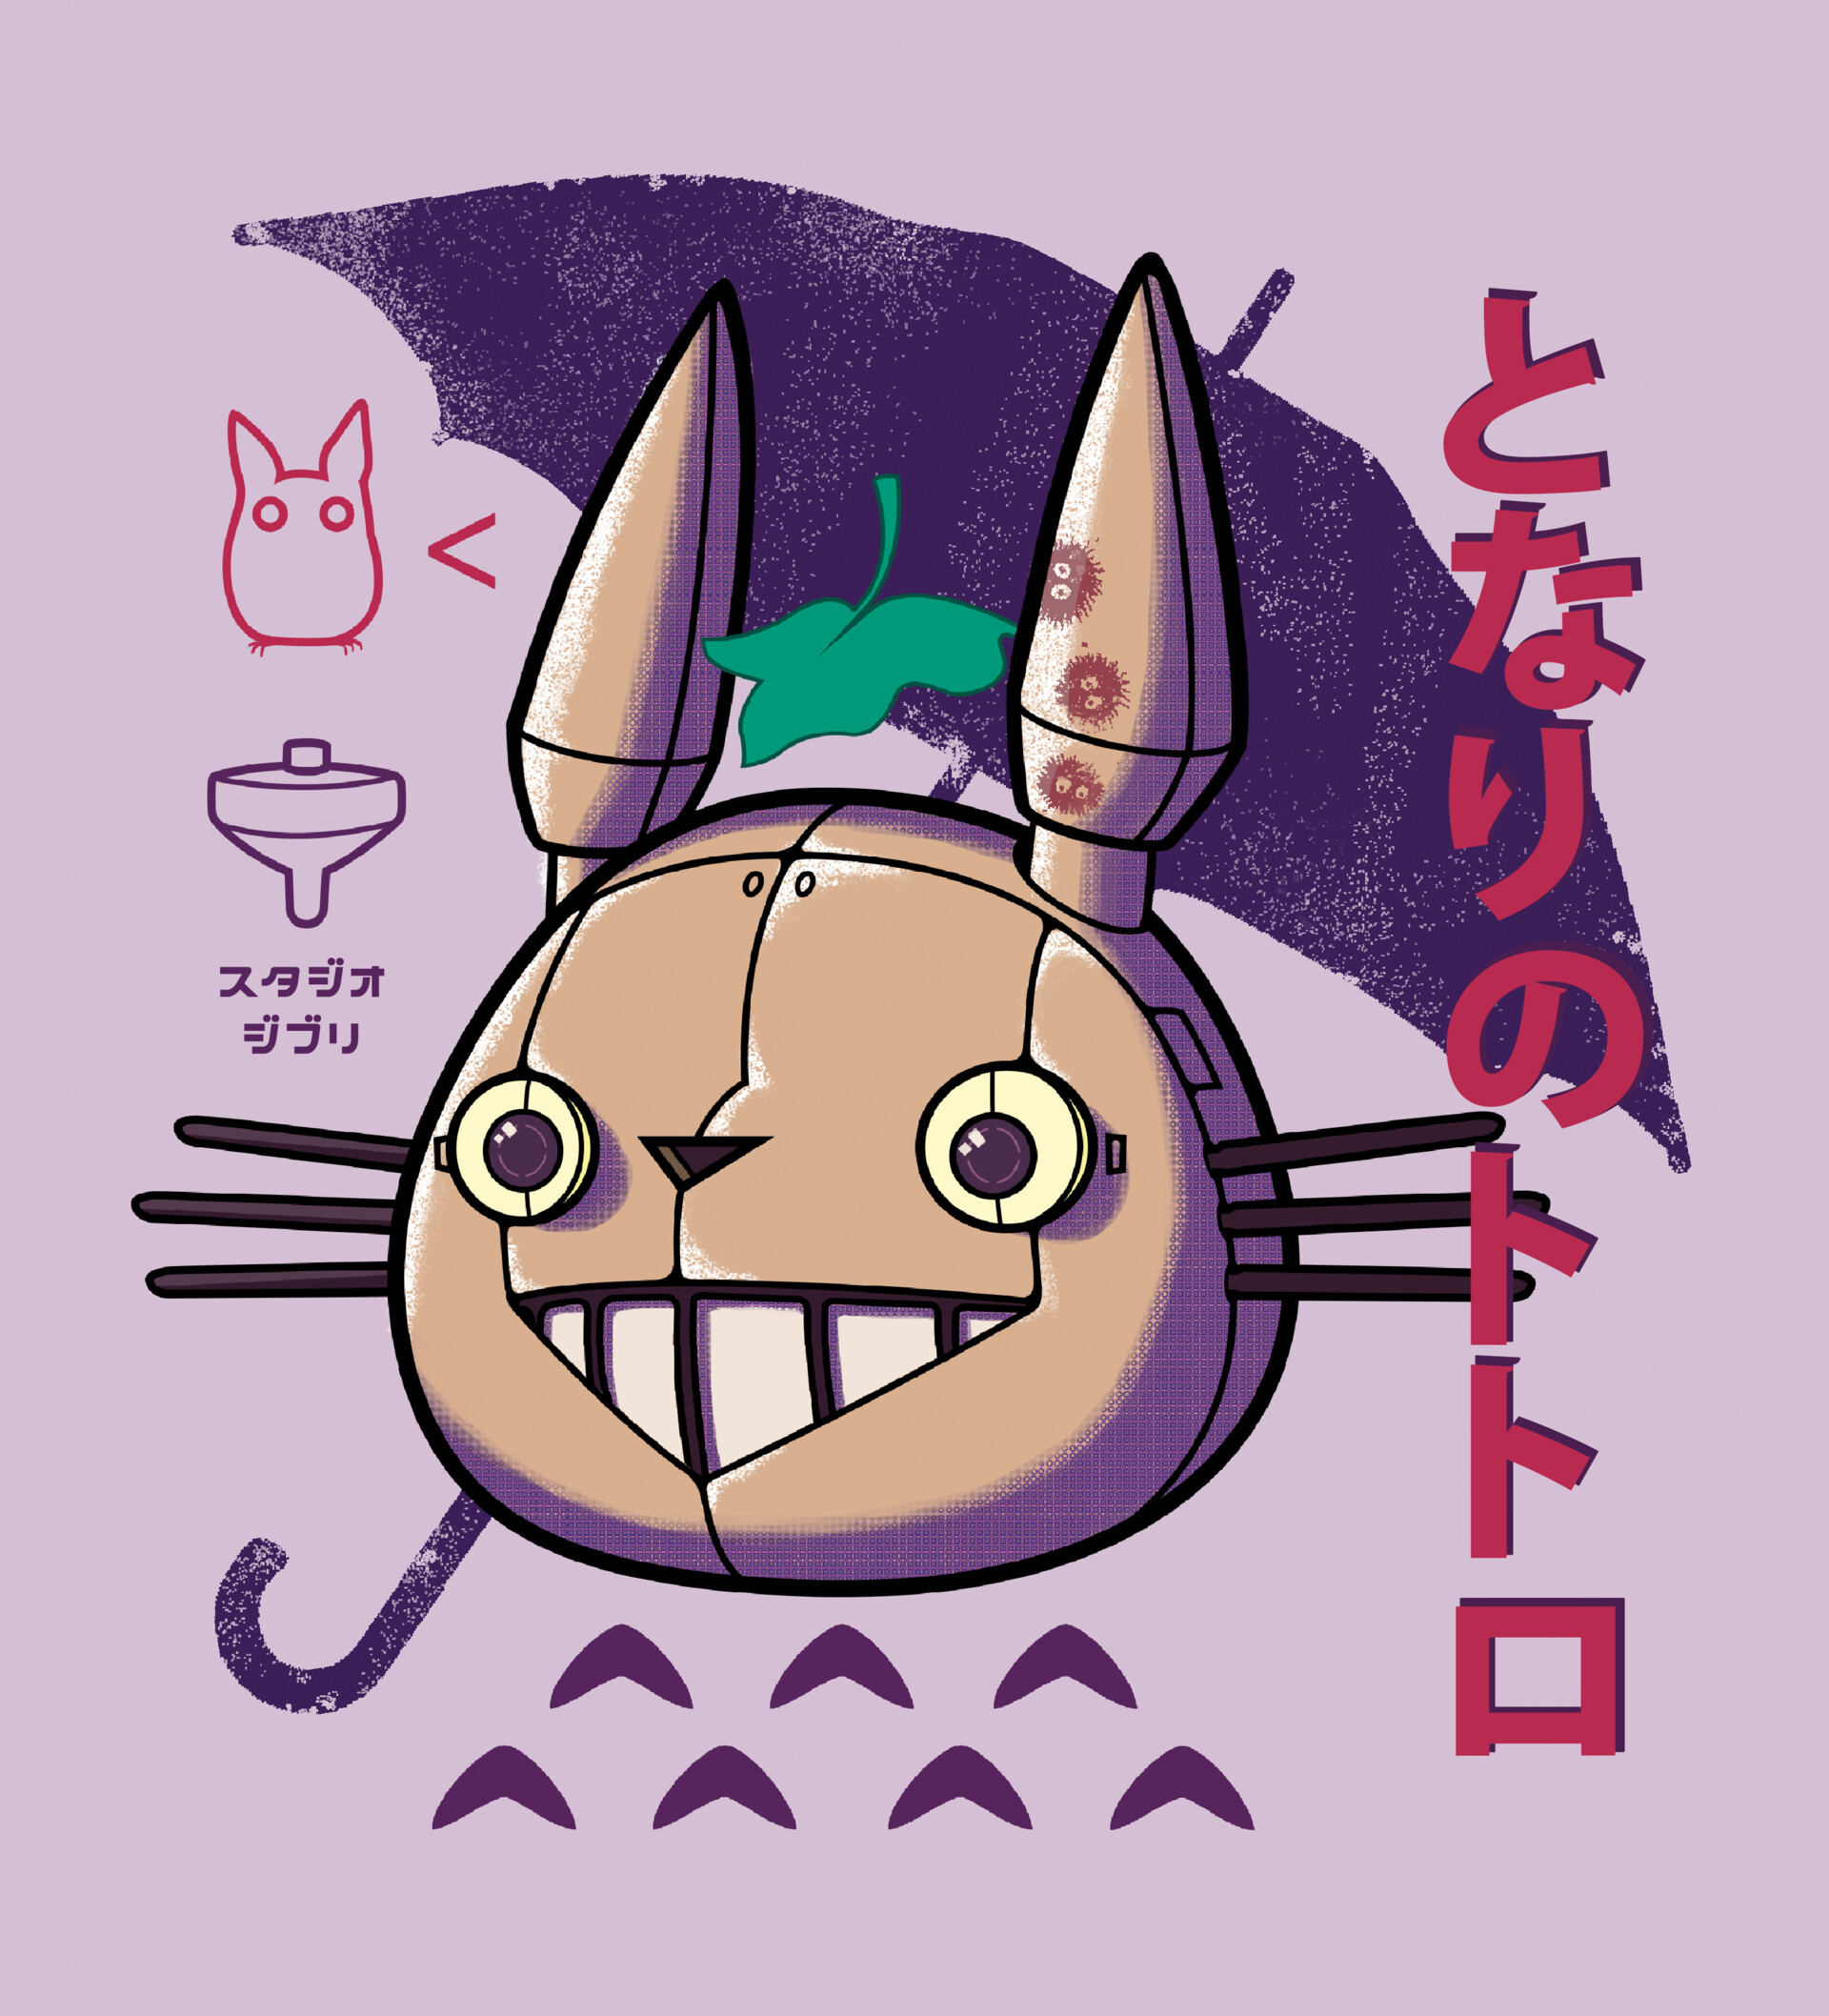 Matteo Santos Pikachu E Totoro Japan Animatronics